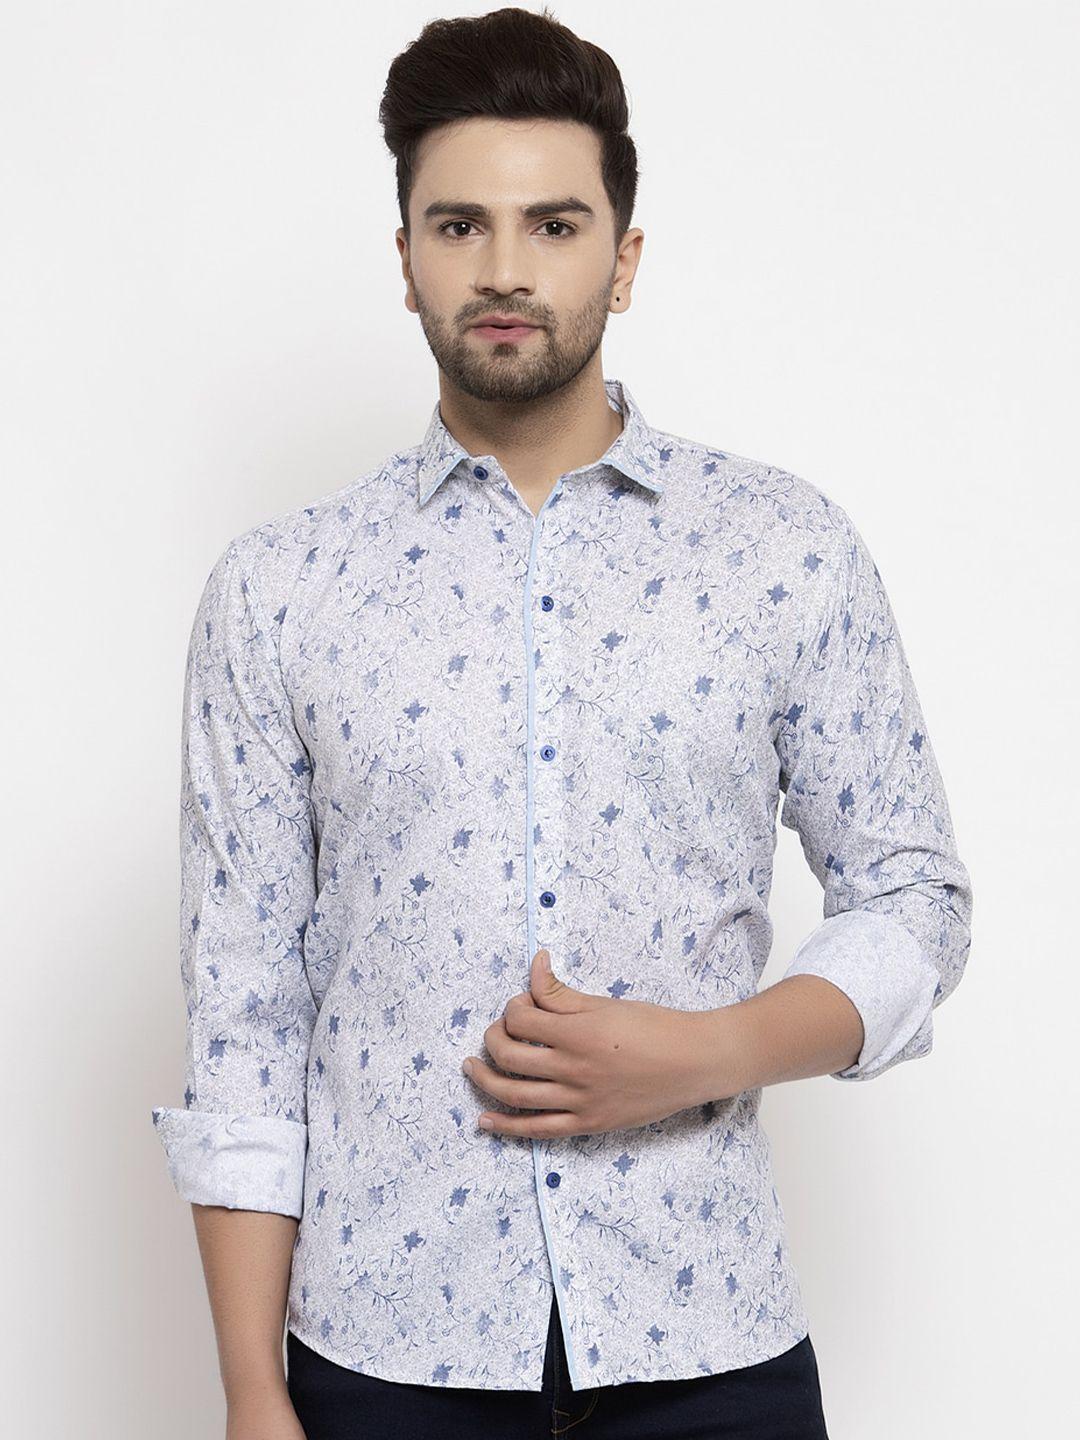 klotthe men blue floral printed casual shirt